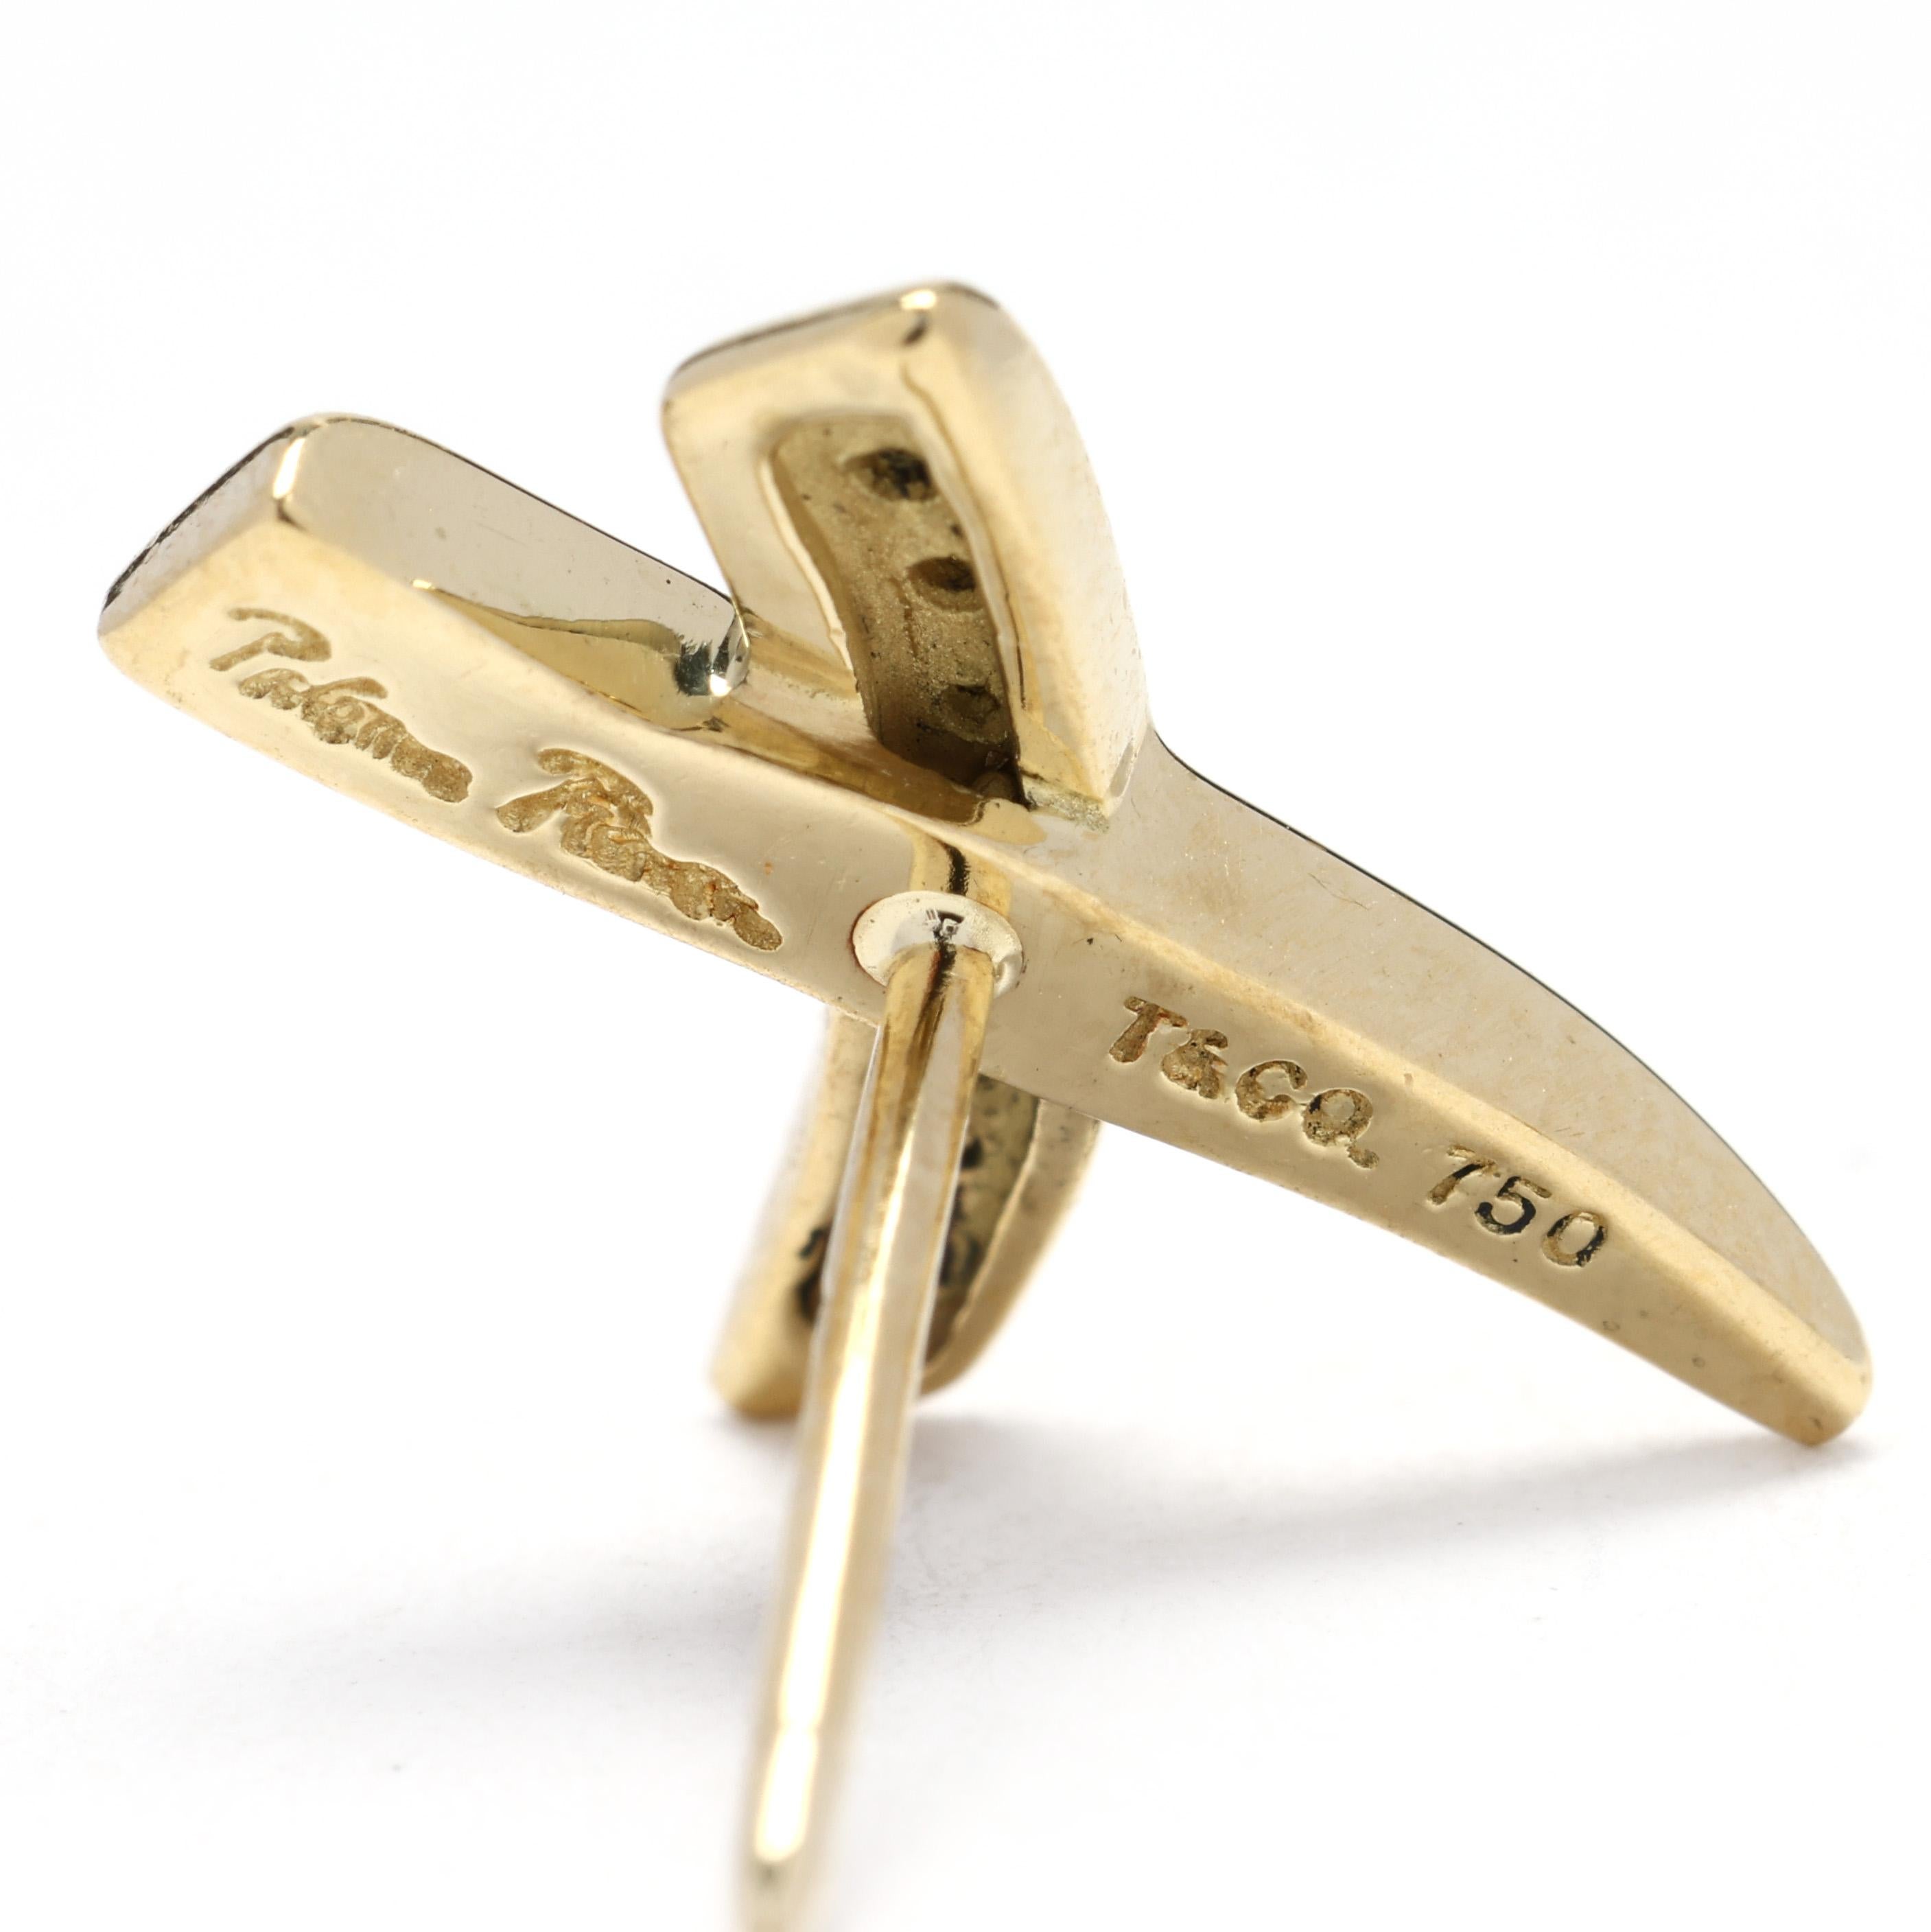 Brilliant Cut Tiffany & Co. Diamond X Studs, 18k Yellow Gold, Statement Earrings